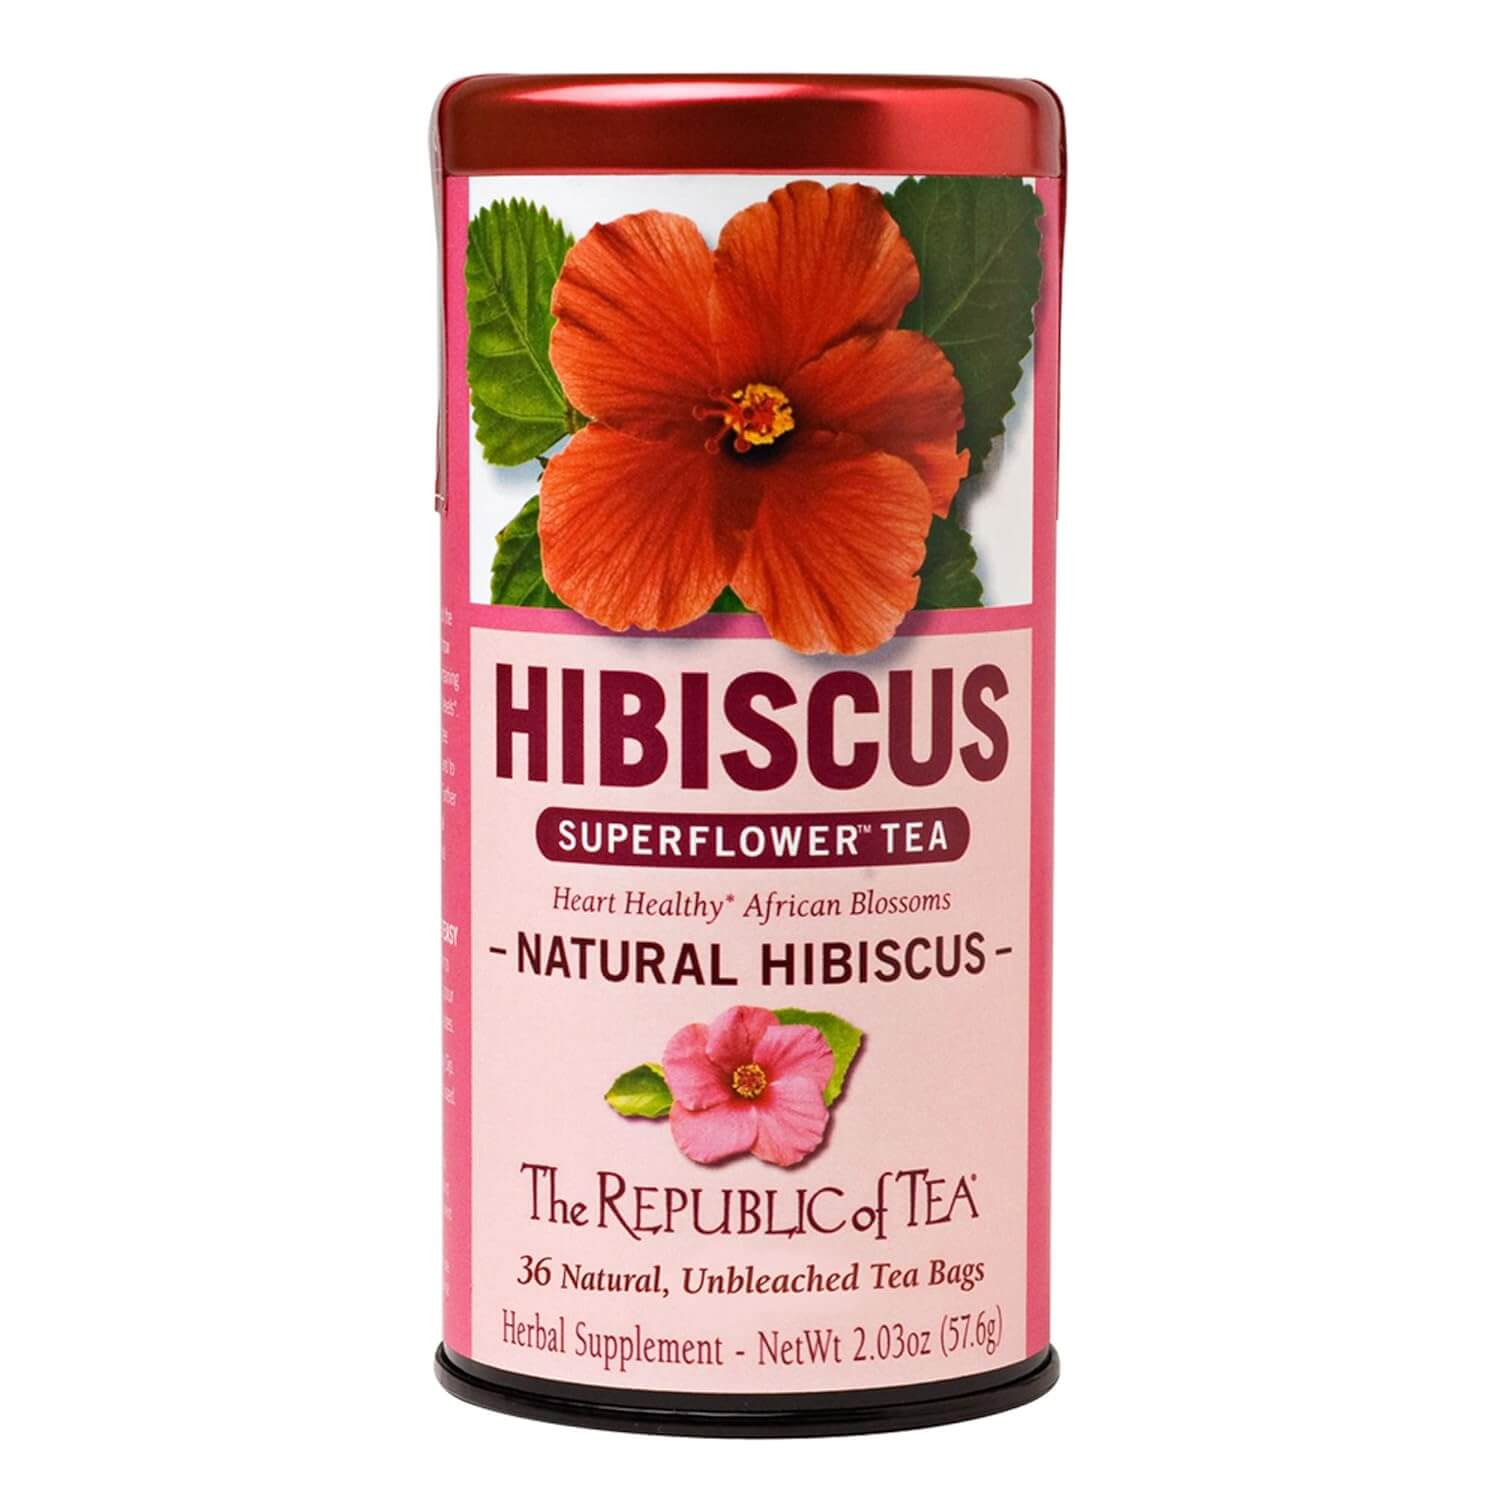 Amazon's Choice: The Republic of Tea Natural Hibiscus Superflower Tea